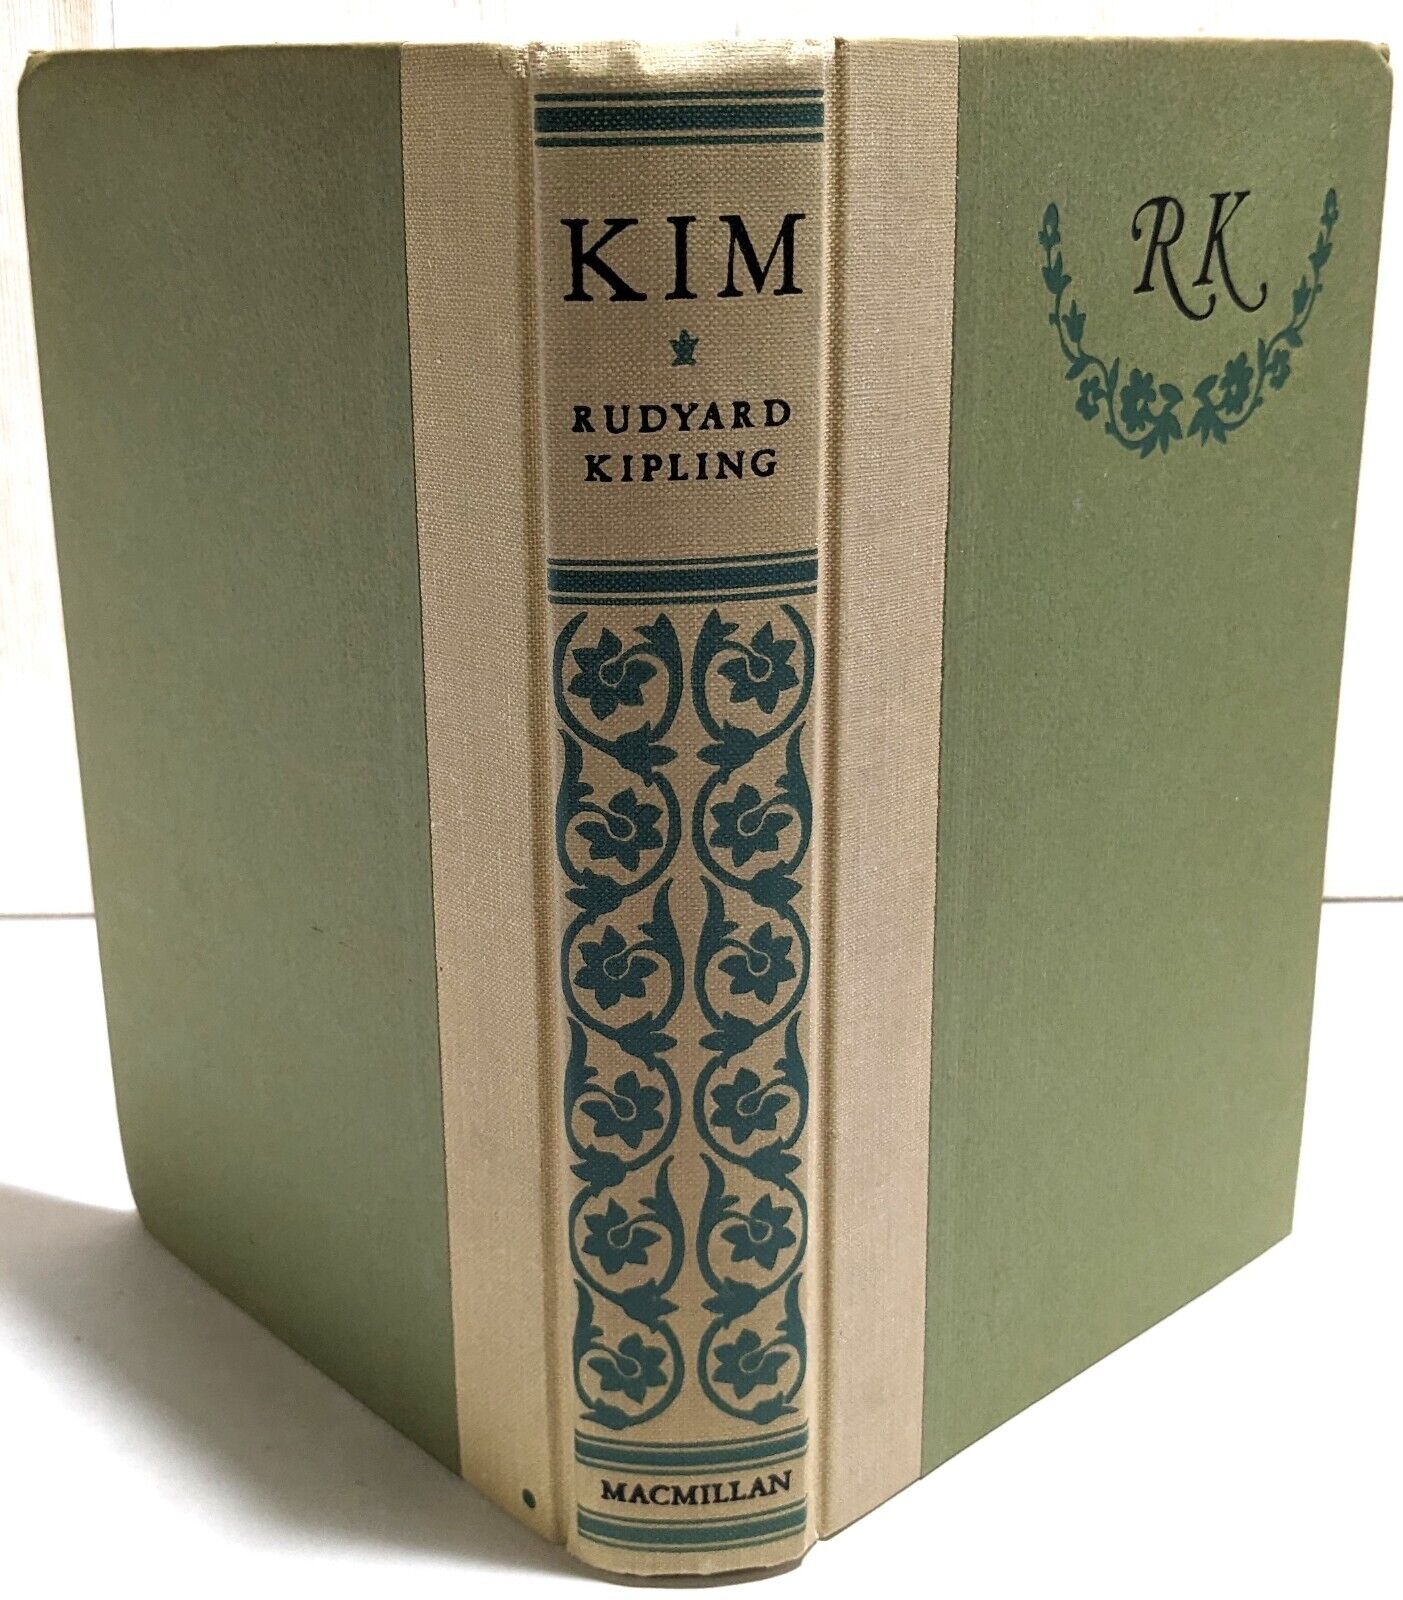 Kim by Rudyard Kipling : Macmillan Vintage Canadian Edition